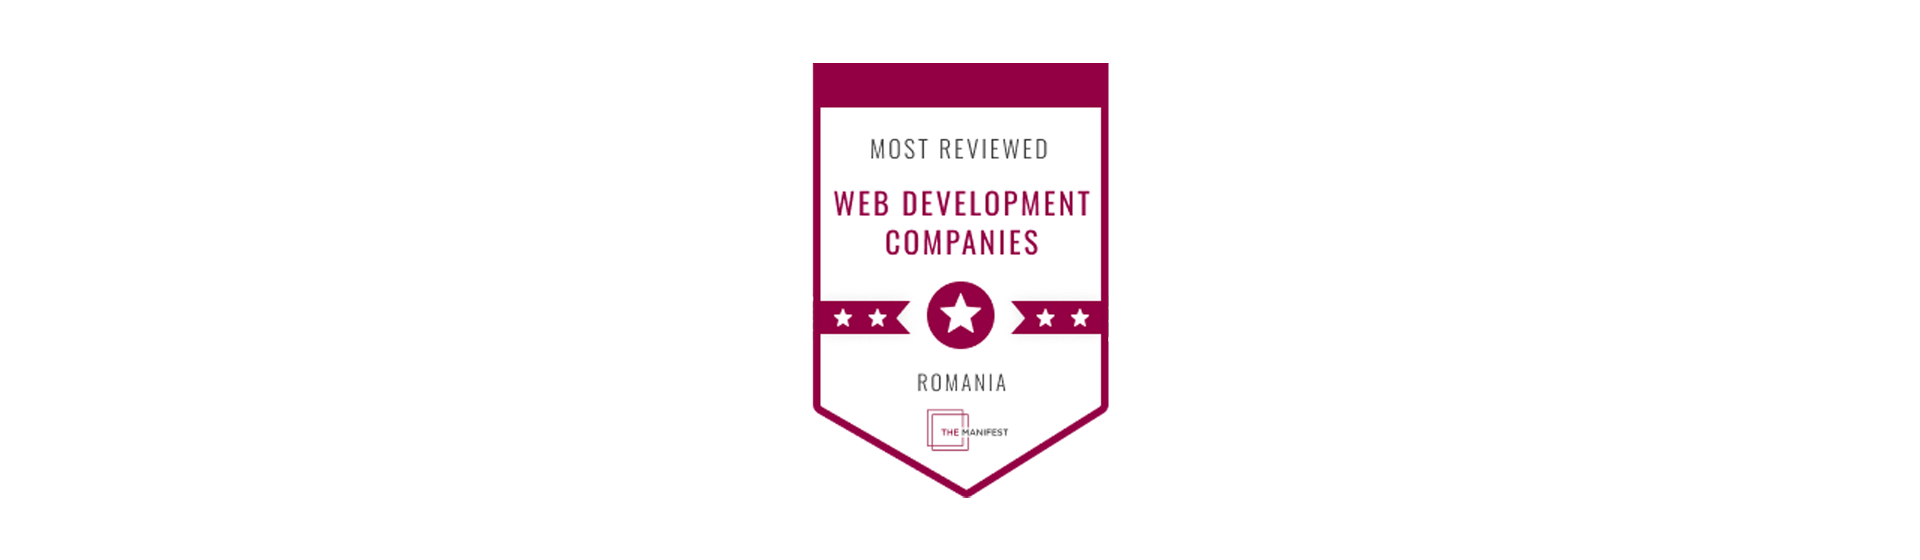 web development company Romania